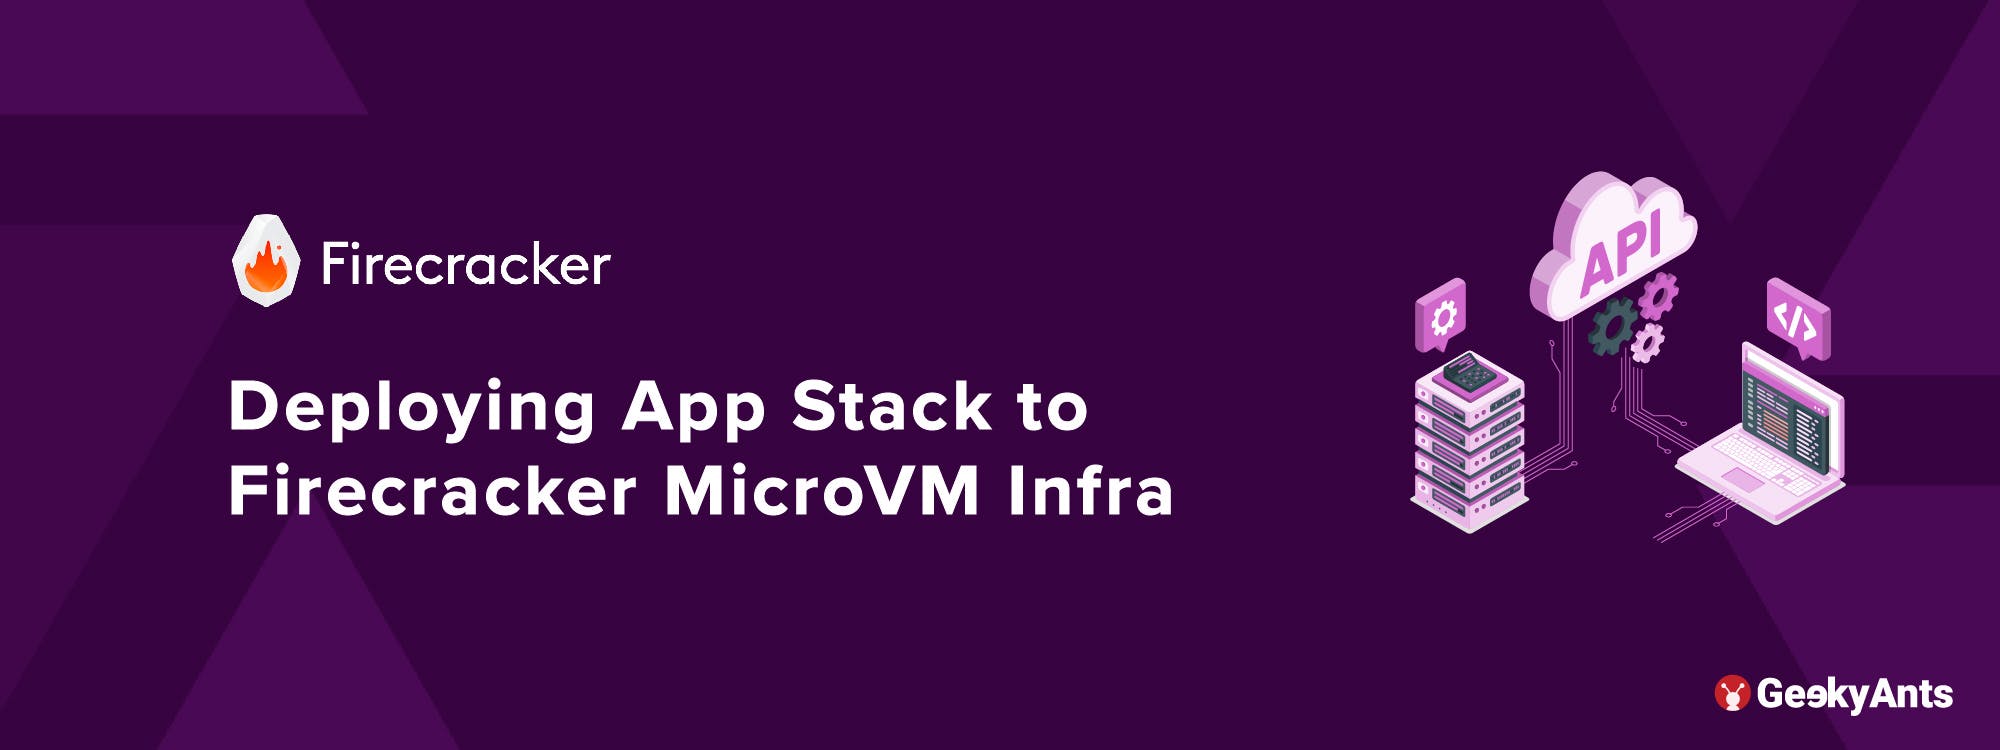 Deploying App Stack to Firecracker MicroVM Infra